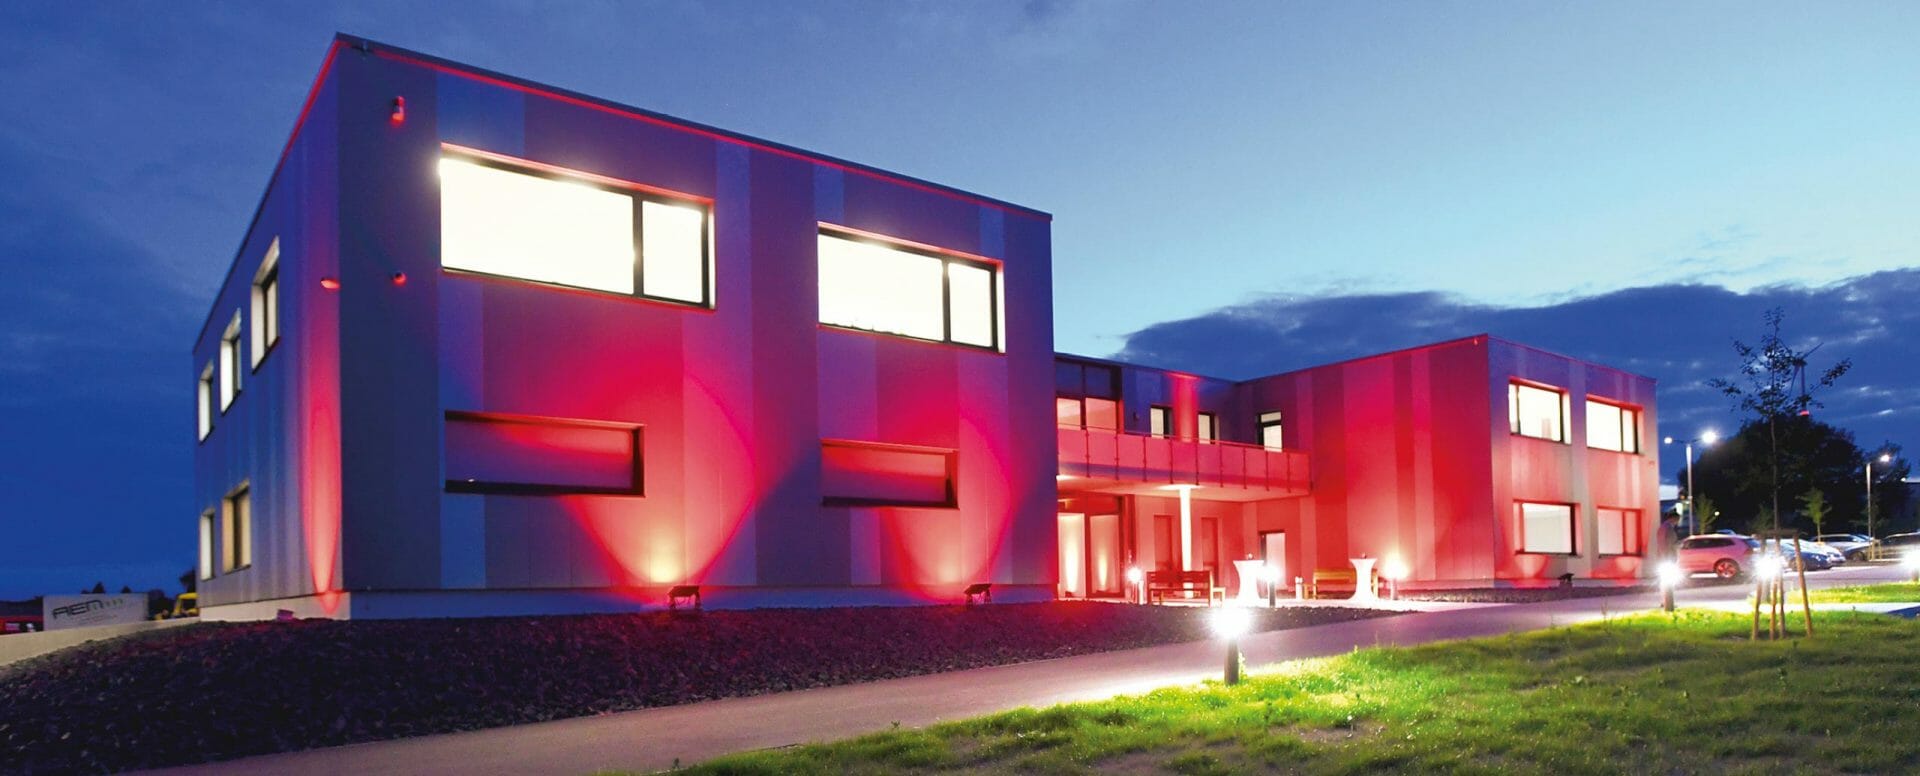 Rot beleuchtetes Firmengebäude der GVS-GROSSVERBRAUCHERSPEZIALISTEN eG in Friedewald